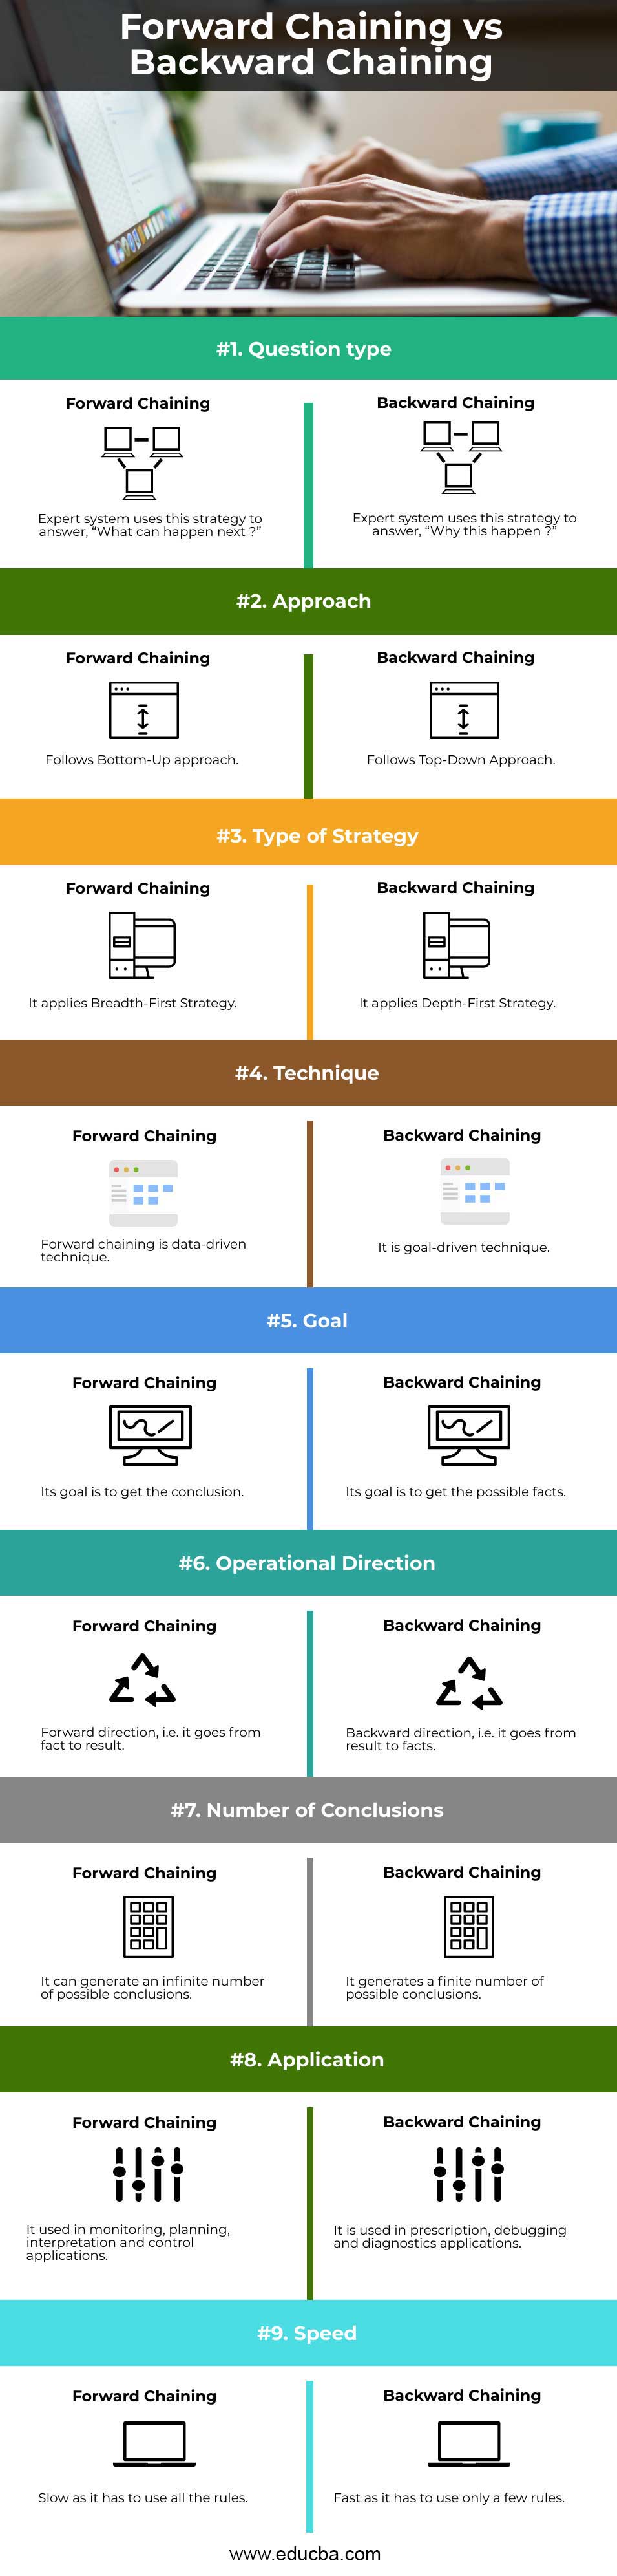 Forward Chaining vs Backward Chaining info